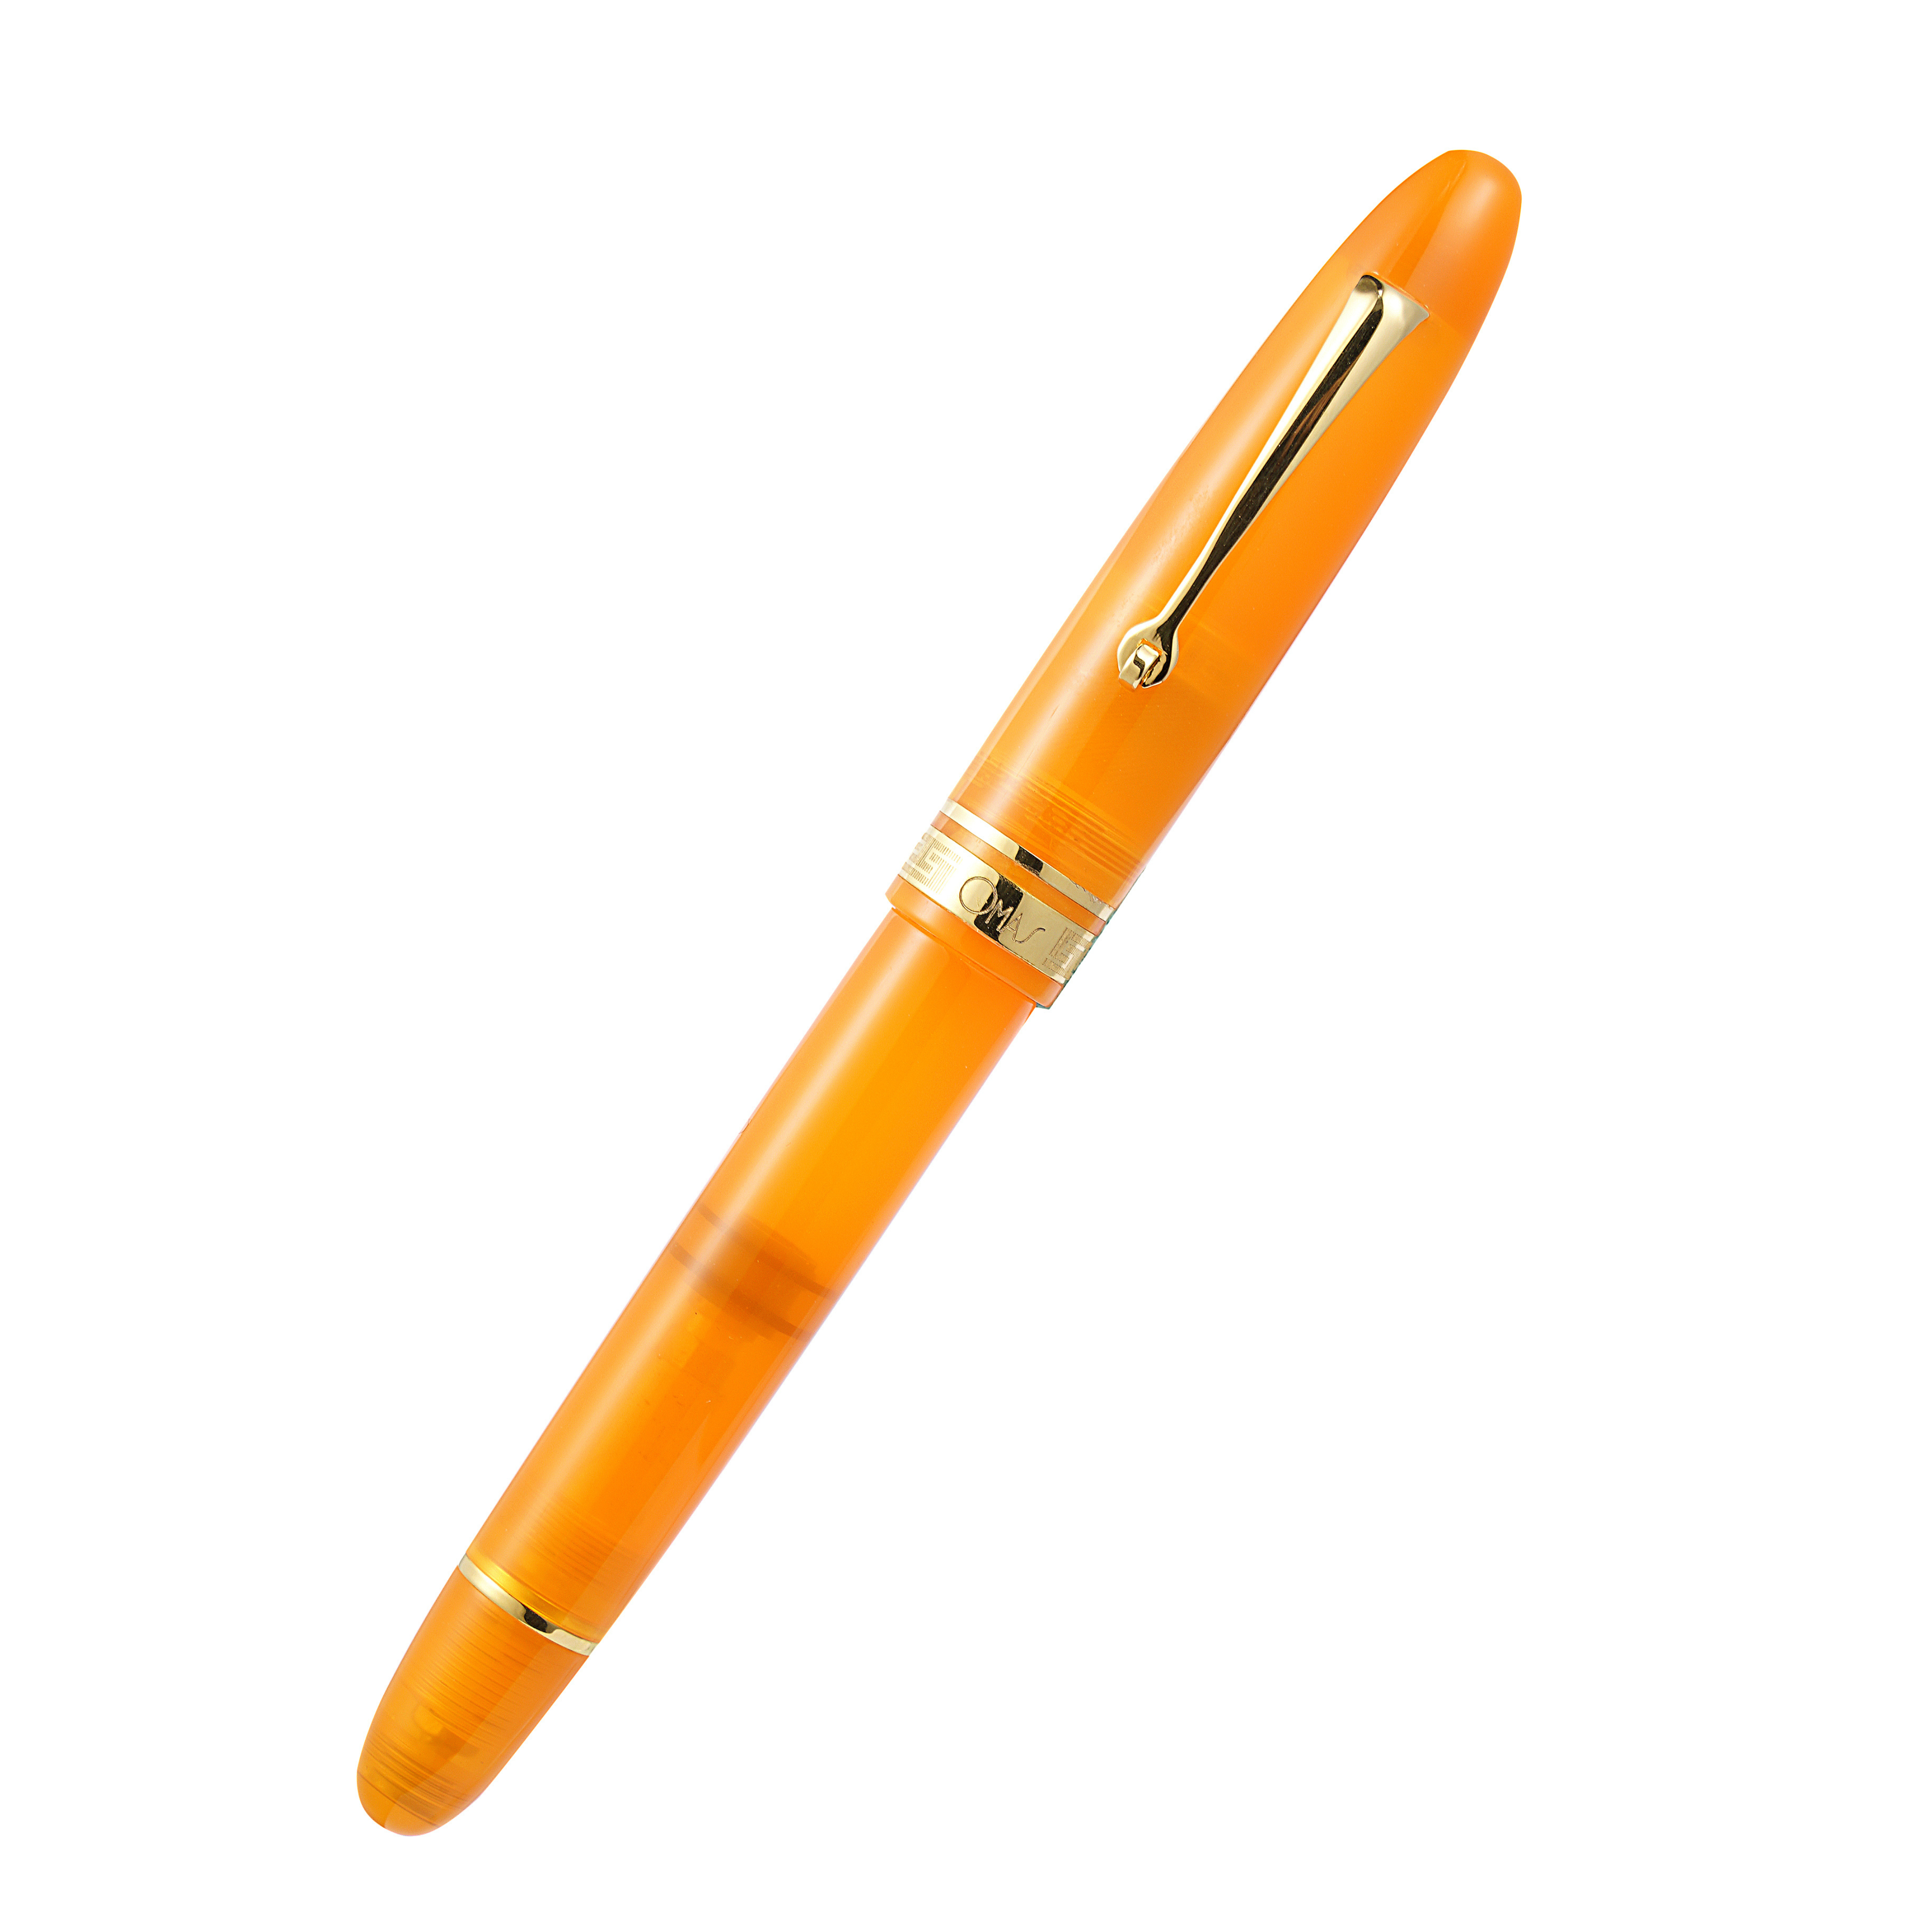 Omas Ogiva Fountain Pen in Arancione with Gold Trim